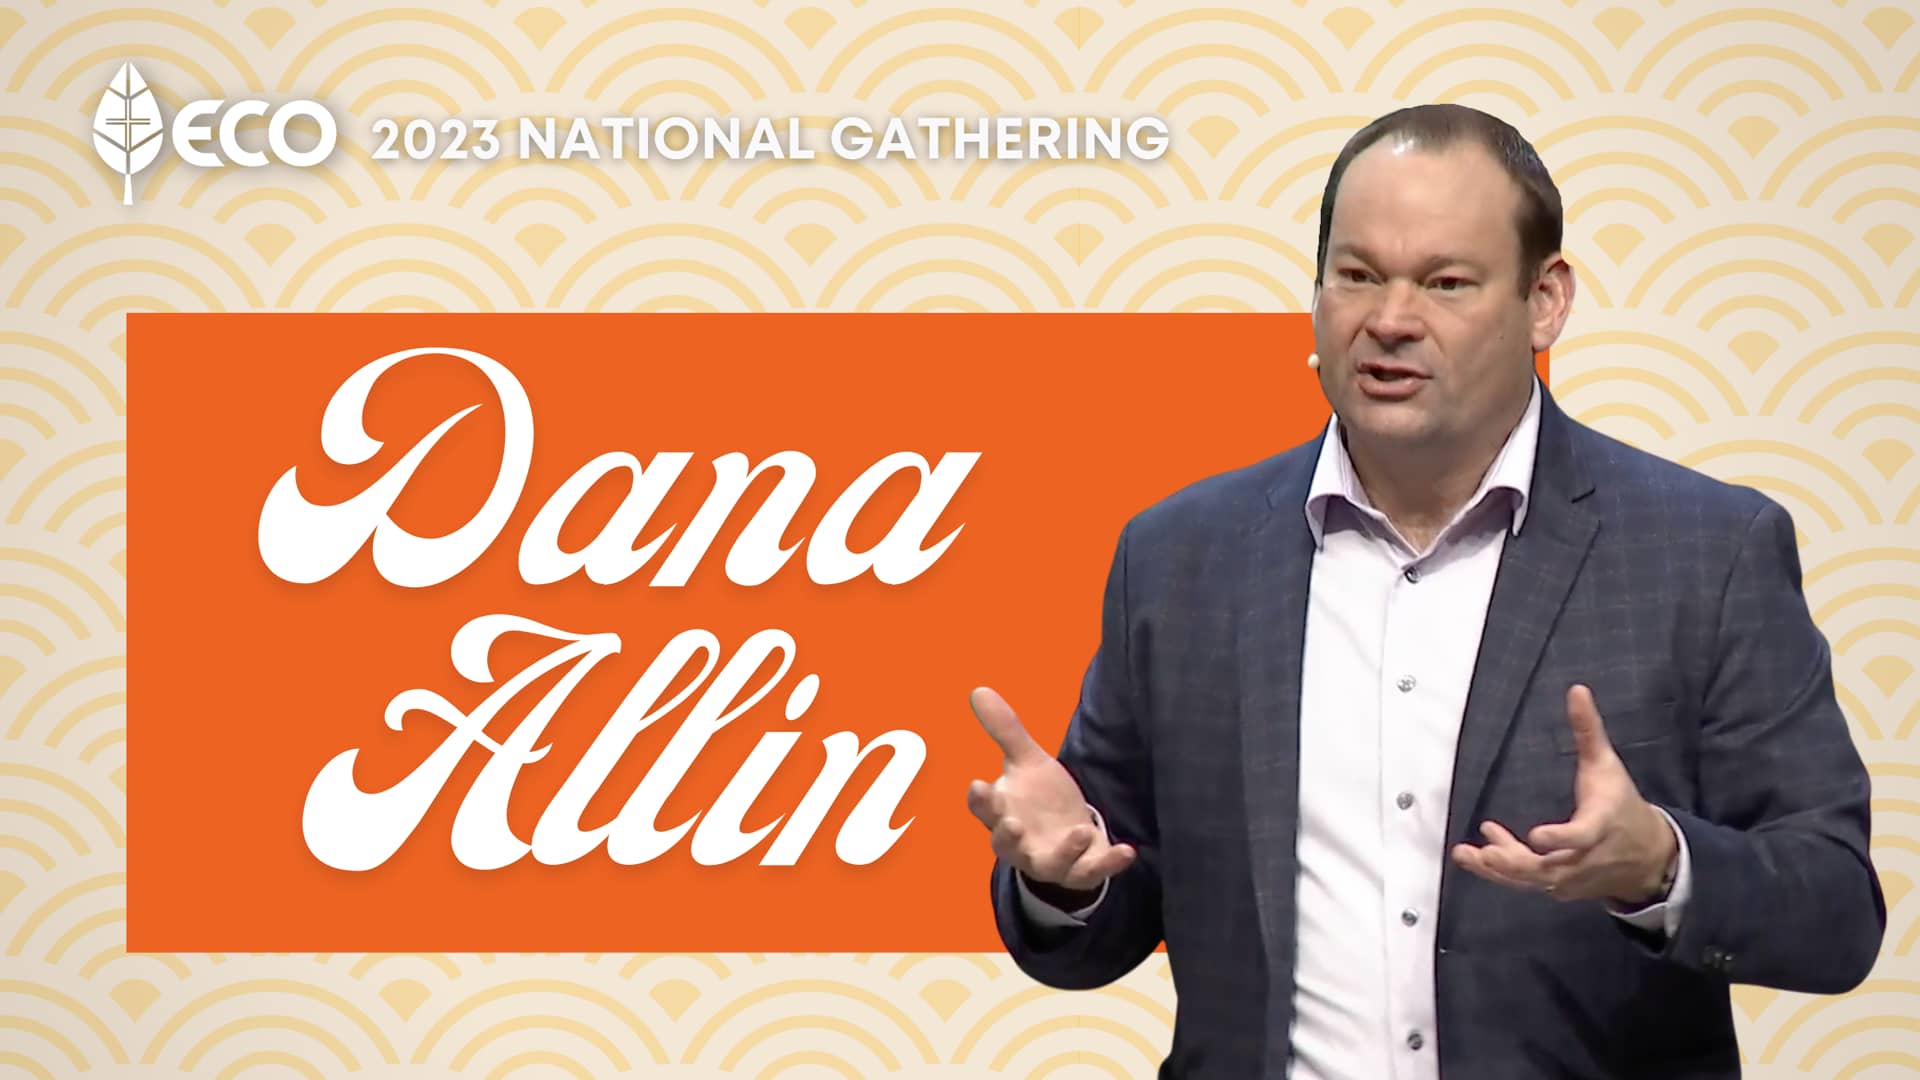 2023 ECO National Gathering Dana Allin on Vimeo